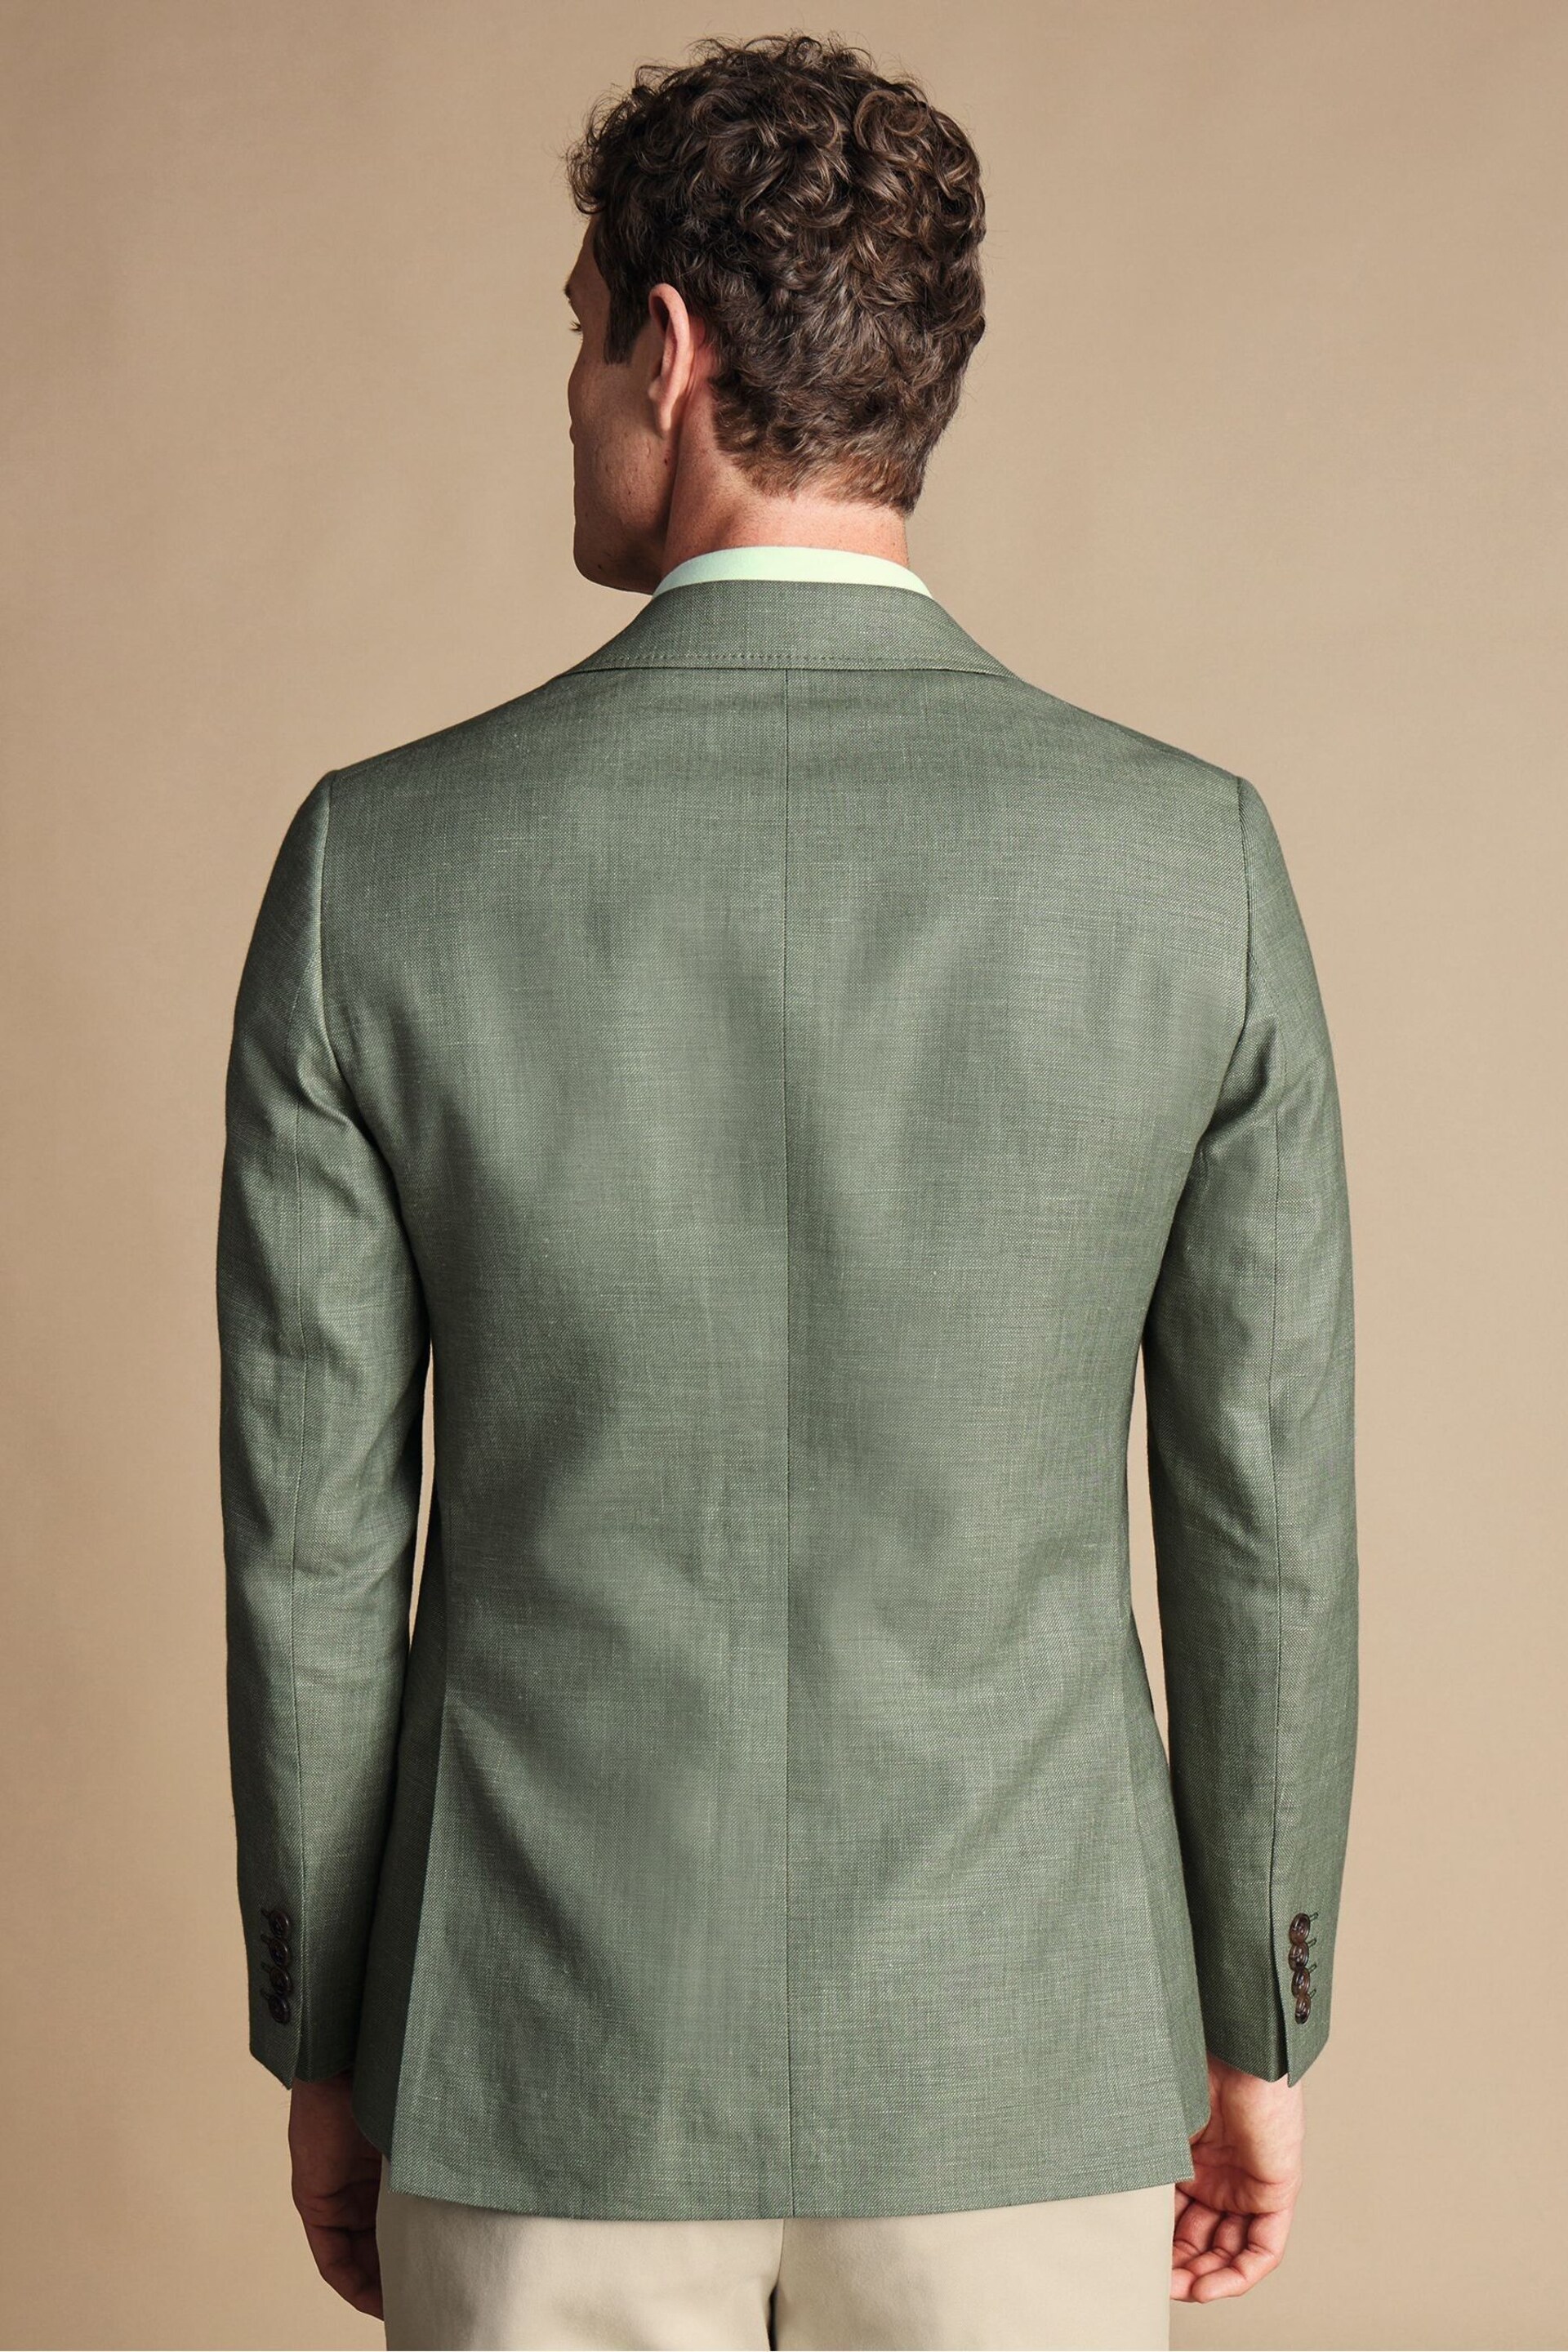 Charles Tyrwhitt Green Slim Fit Updated Linen Cotton Jacket - Image 2 of 5